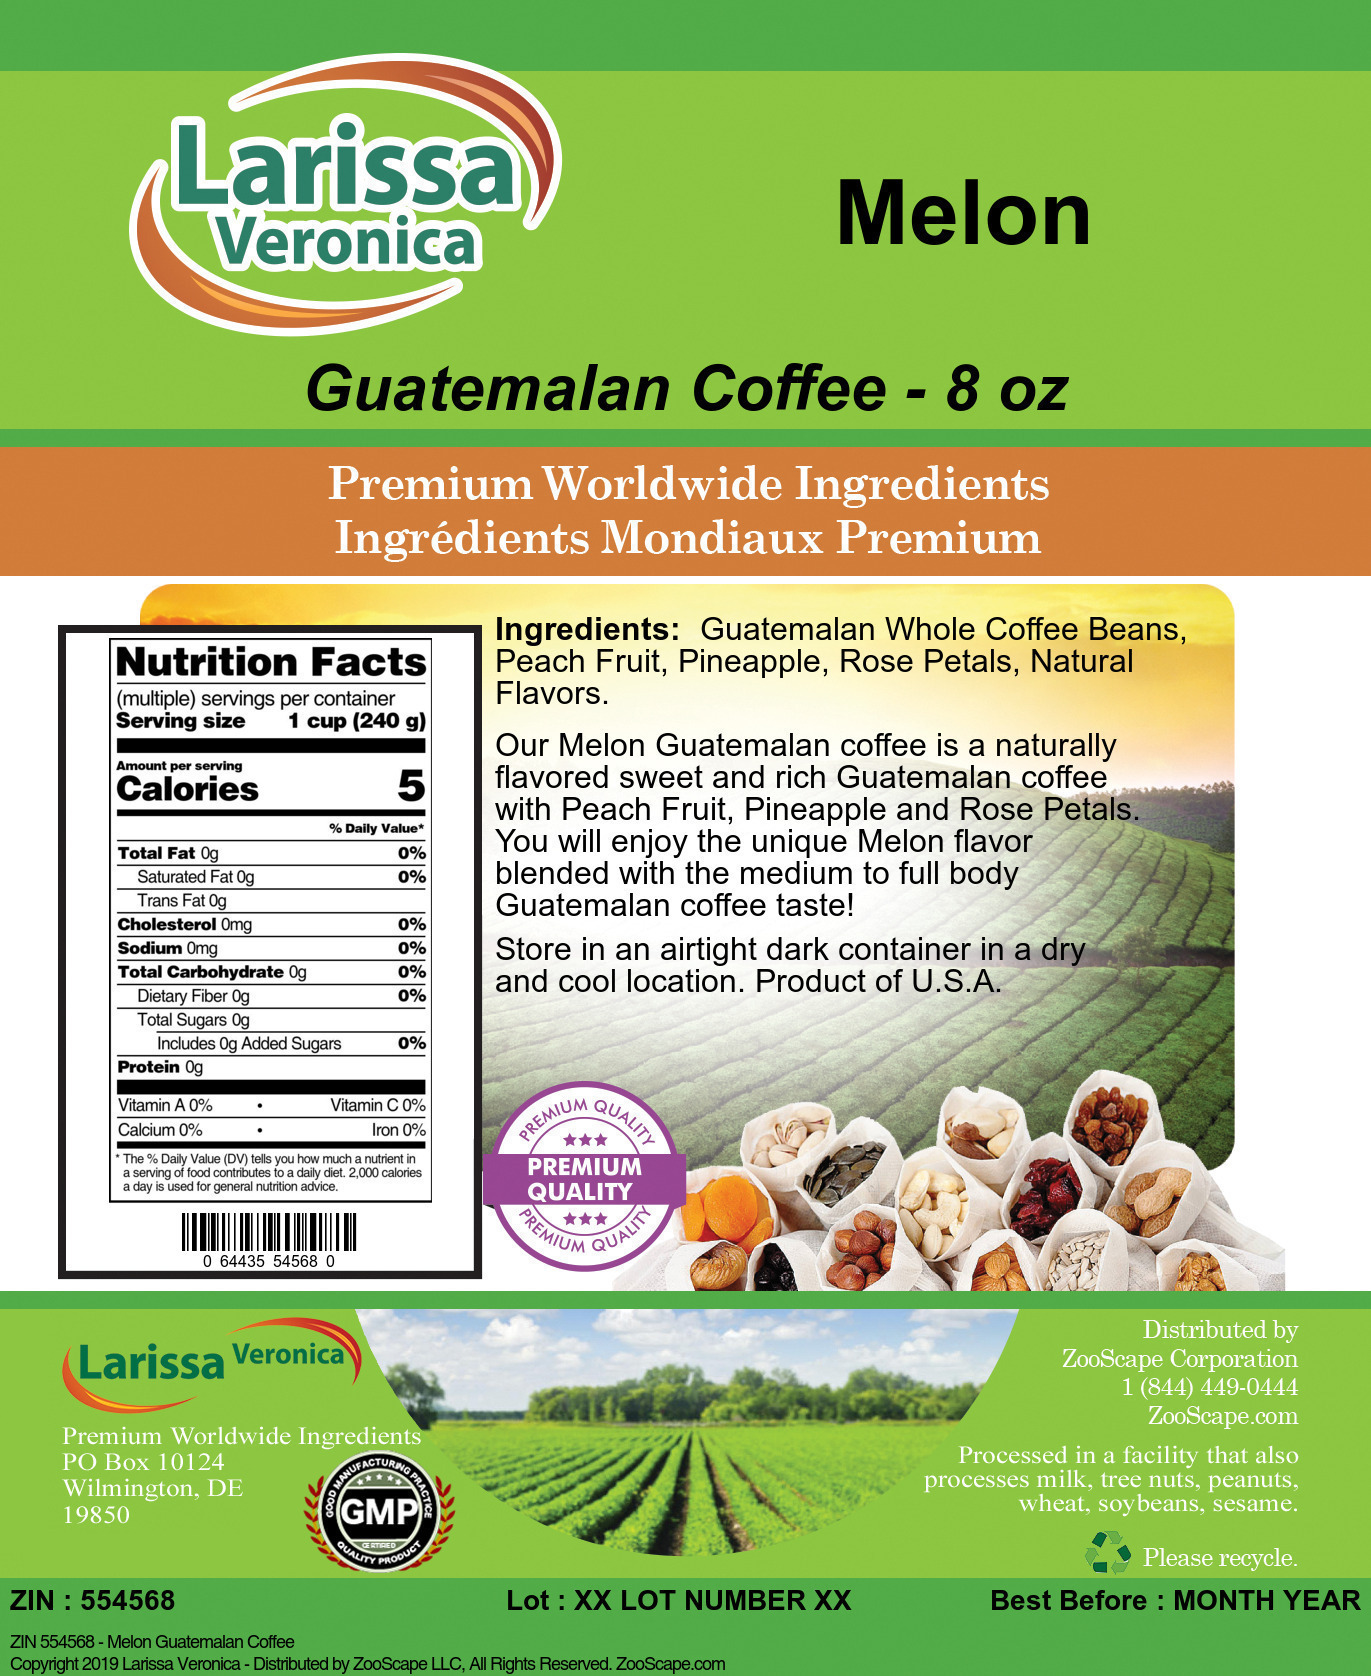 Melon Guatemalan Coffee - Label